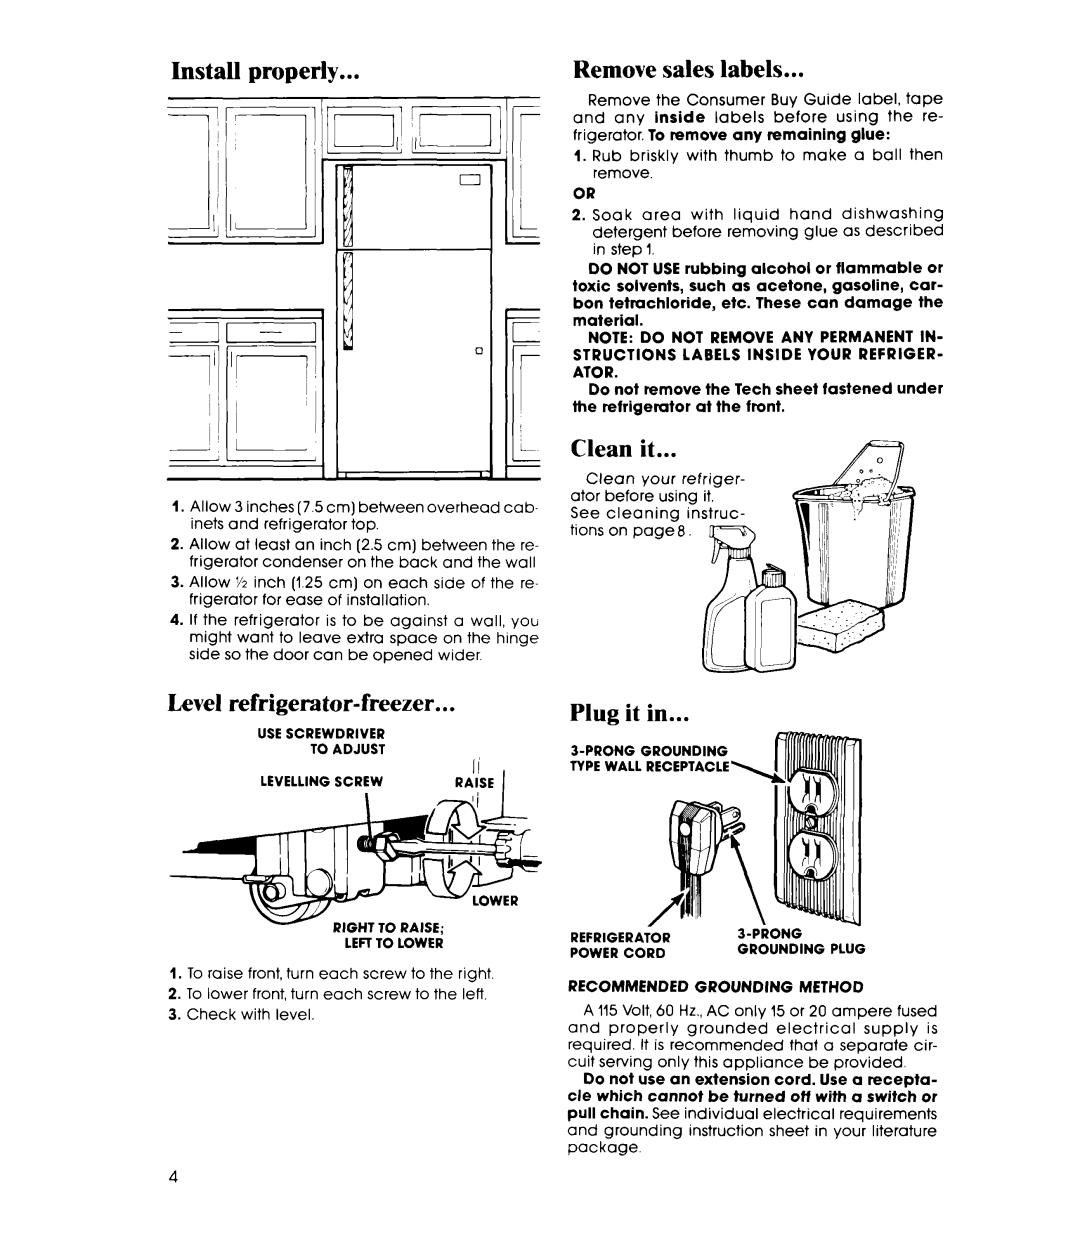 Whirlpool ET18VK, ET18XK manual Install properly, Remove sales labels, Clean it, Plug it, Level refrigerator-freezer 